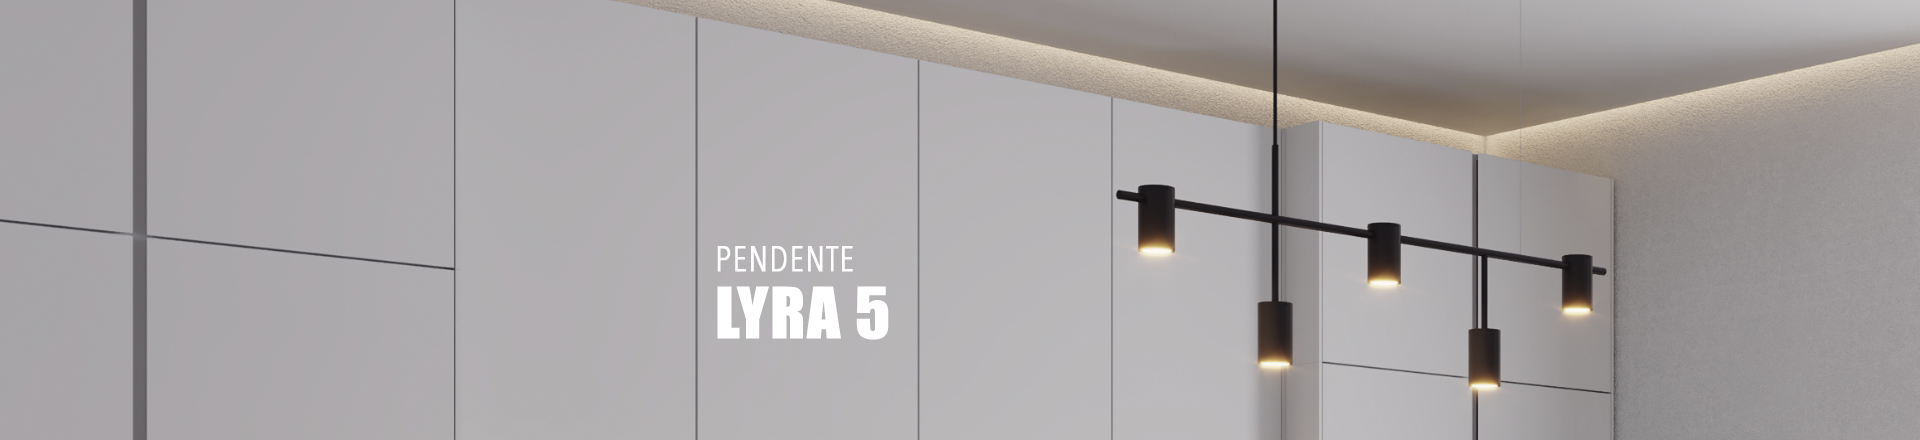 Banner Lyra 5